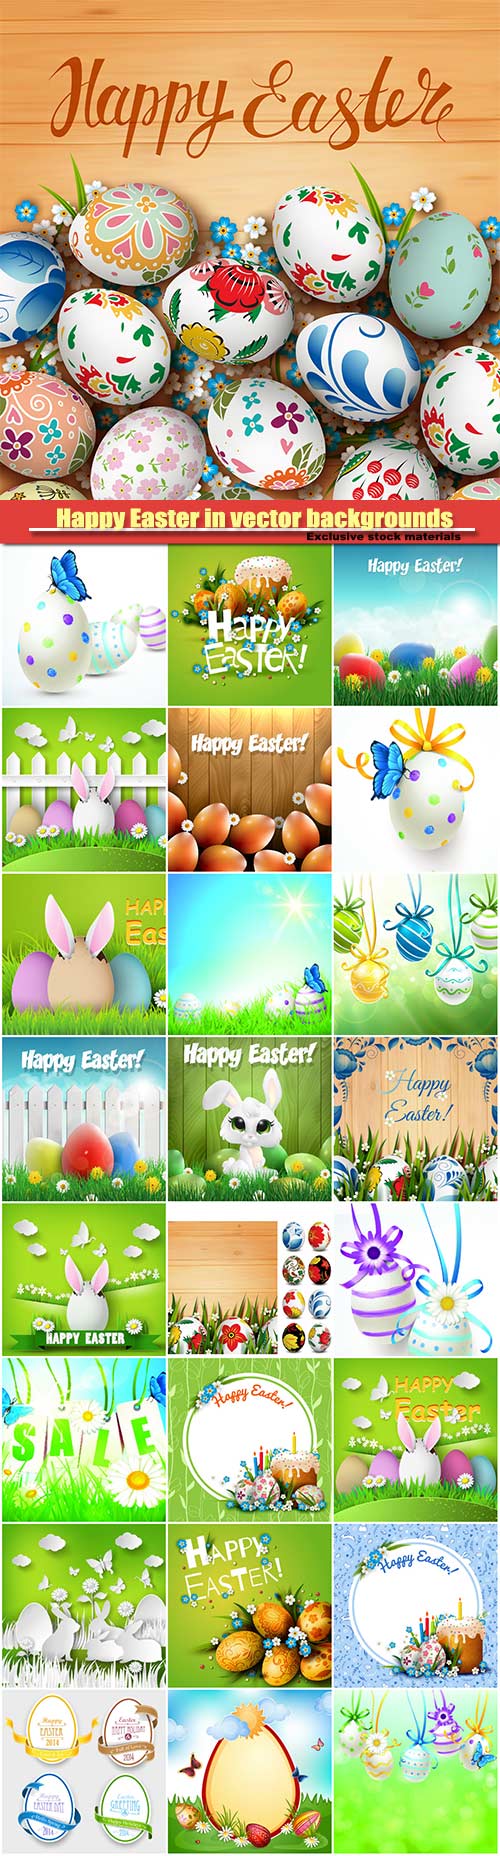 Happy Easter in vector backgrounds